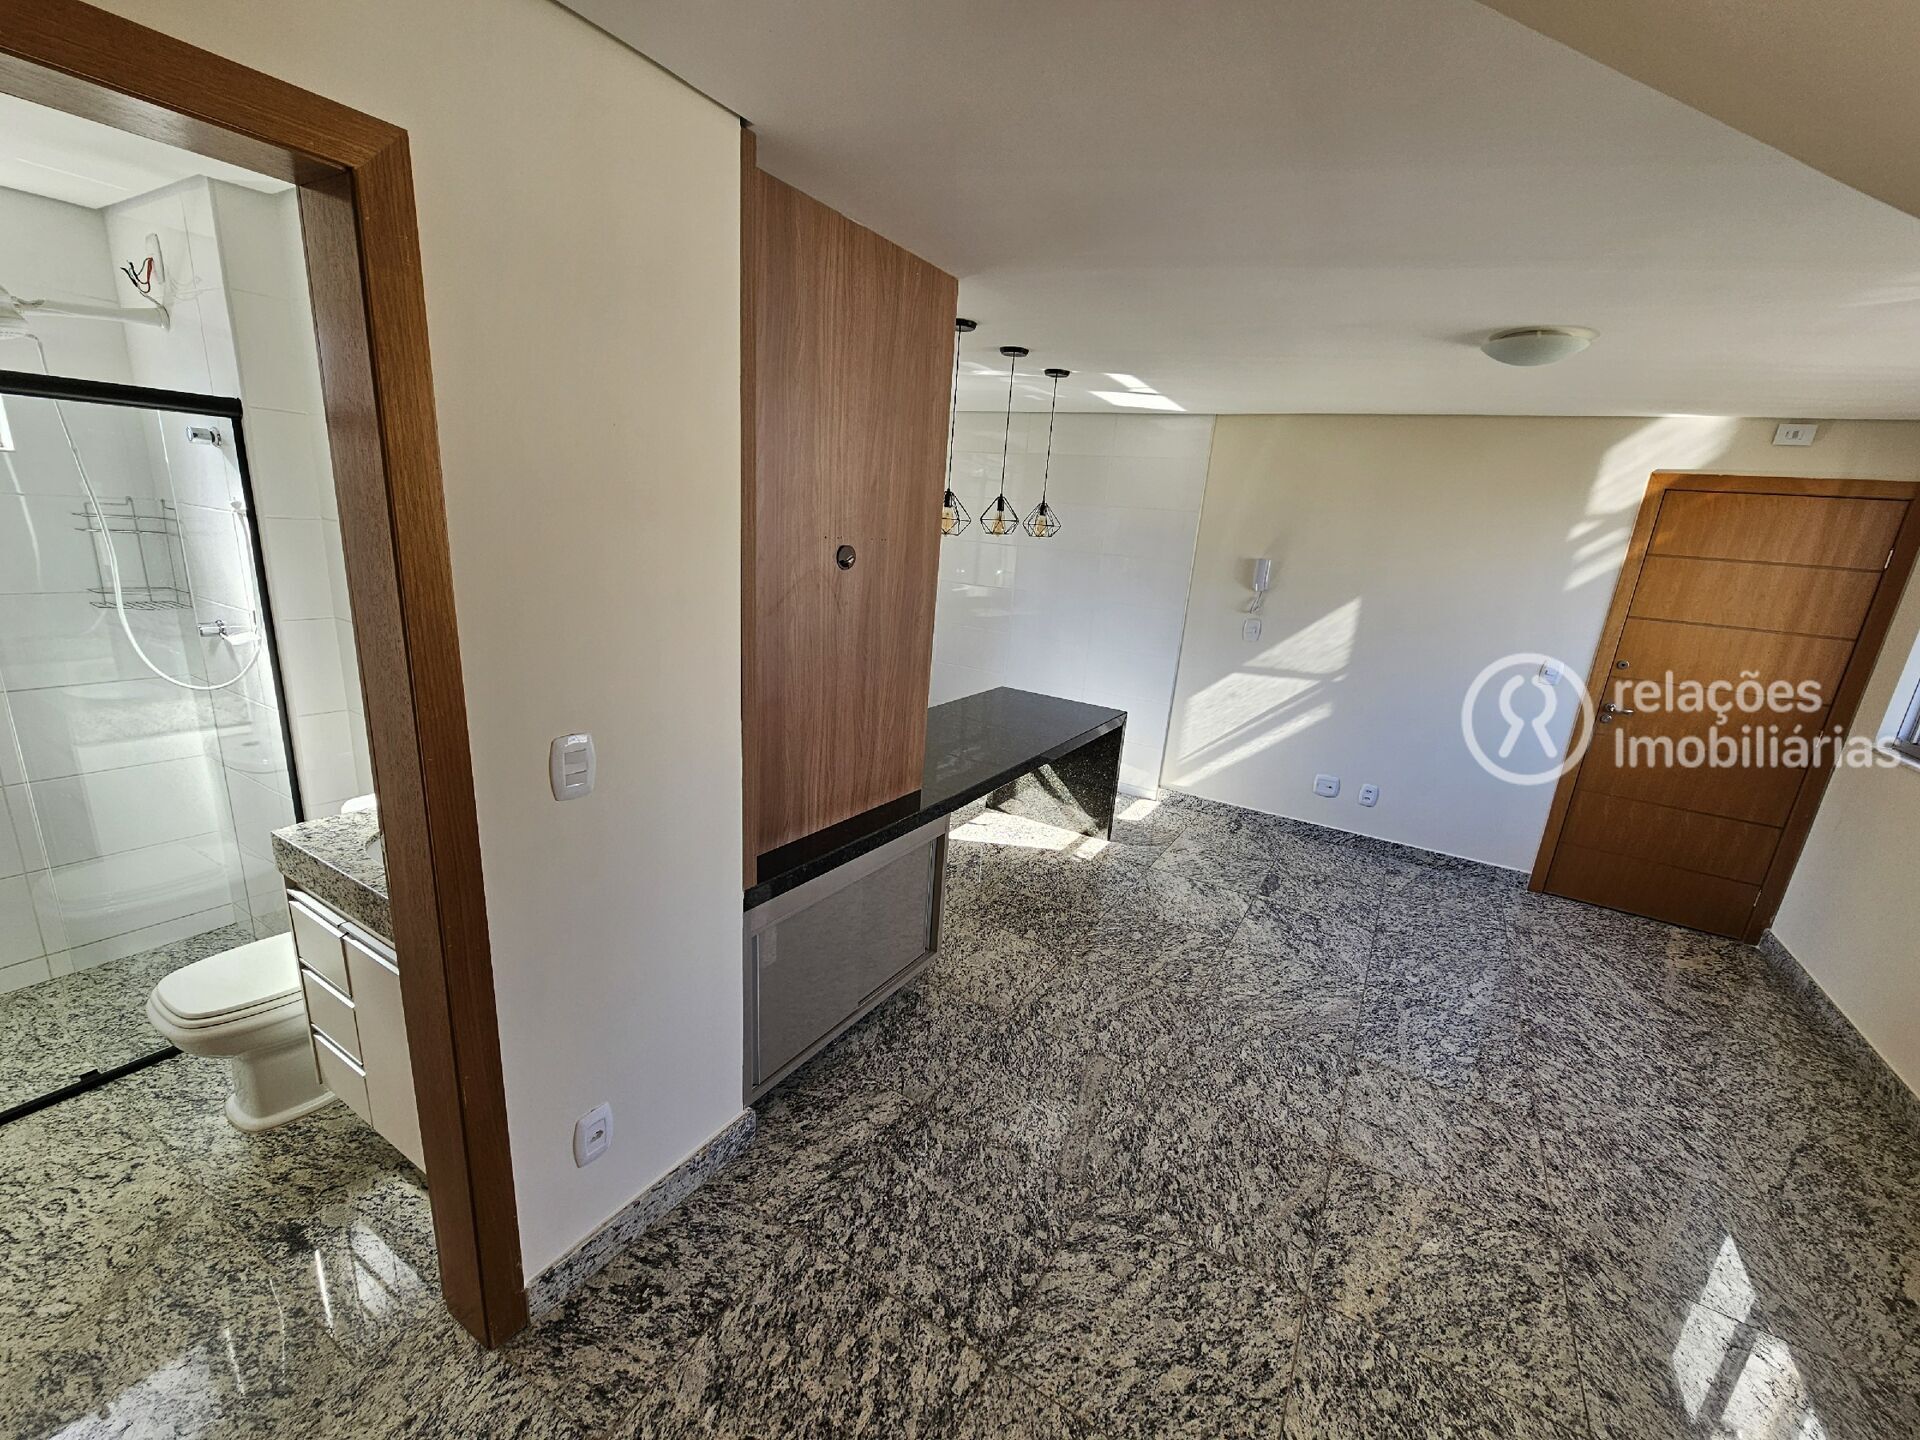 Cobertura, 3 quartos, 149 m² - Foto 4